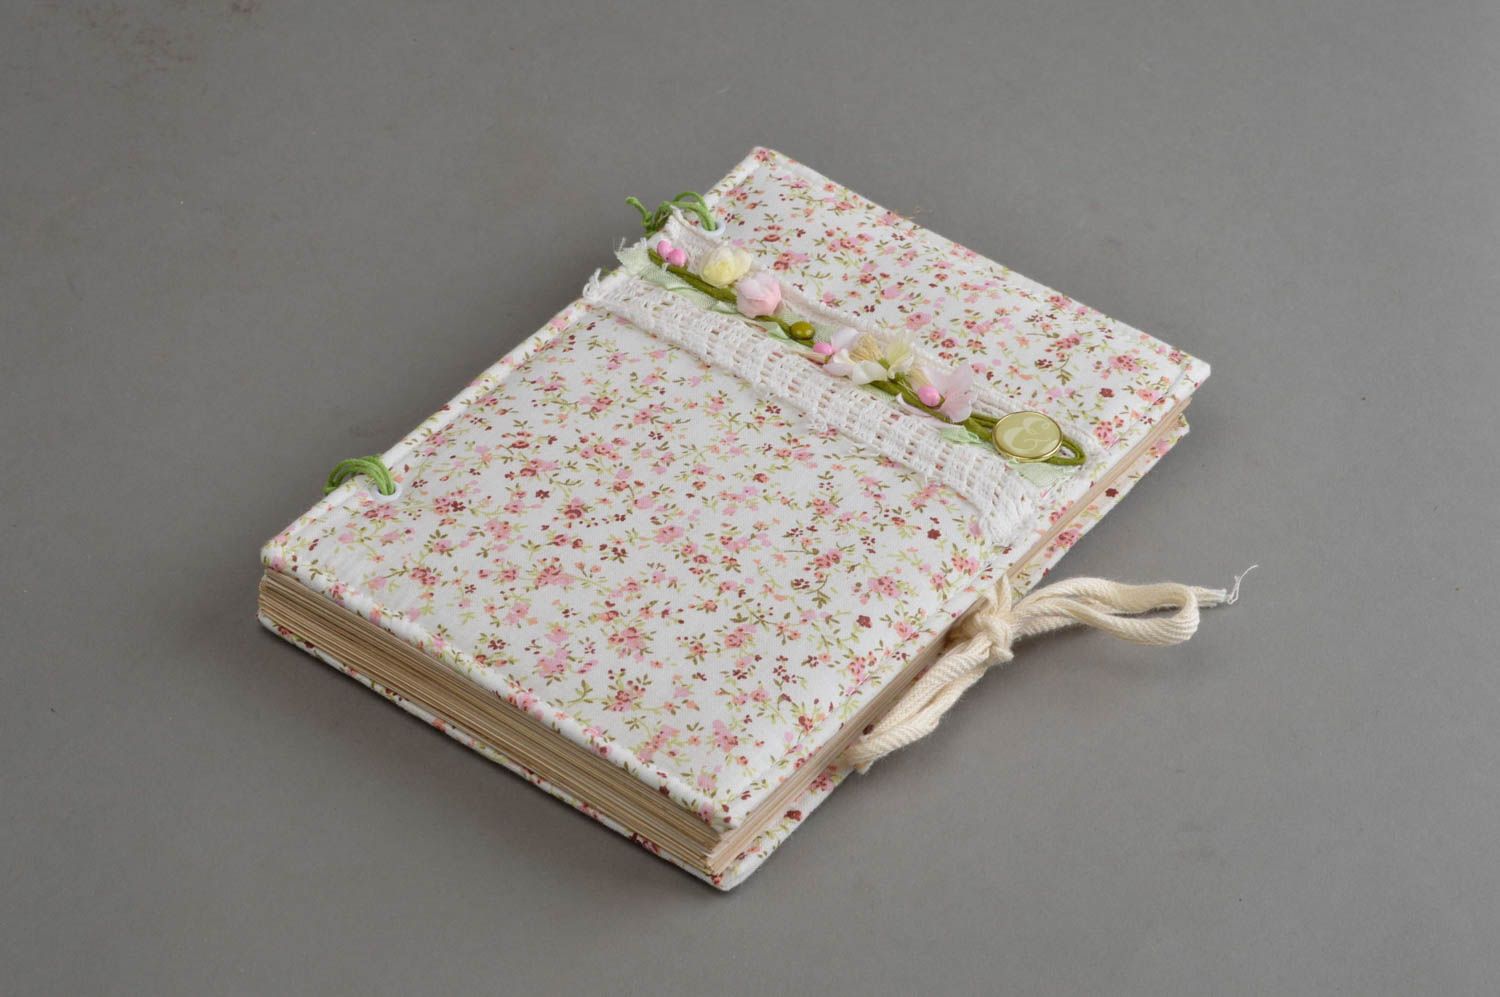 Handmade notepad designer textile notebook for recipes ideas for decor photo 2